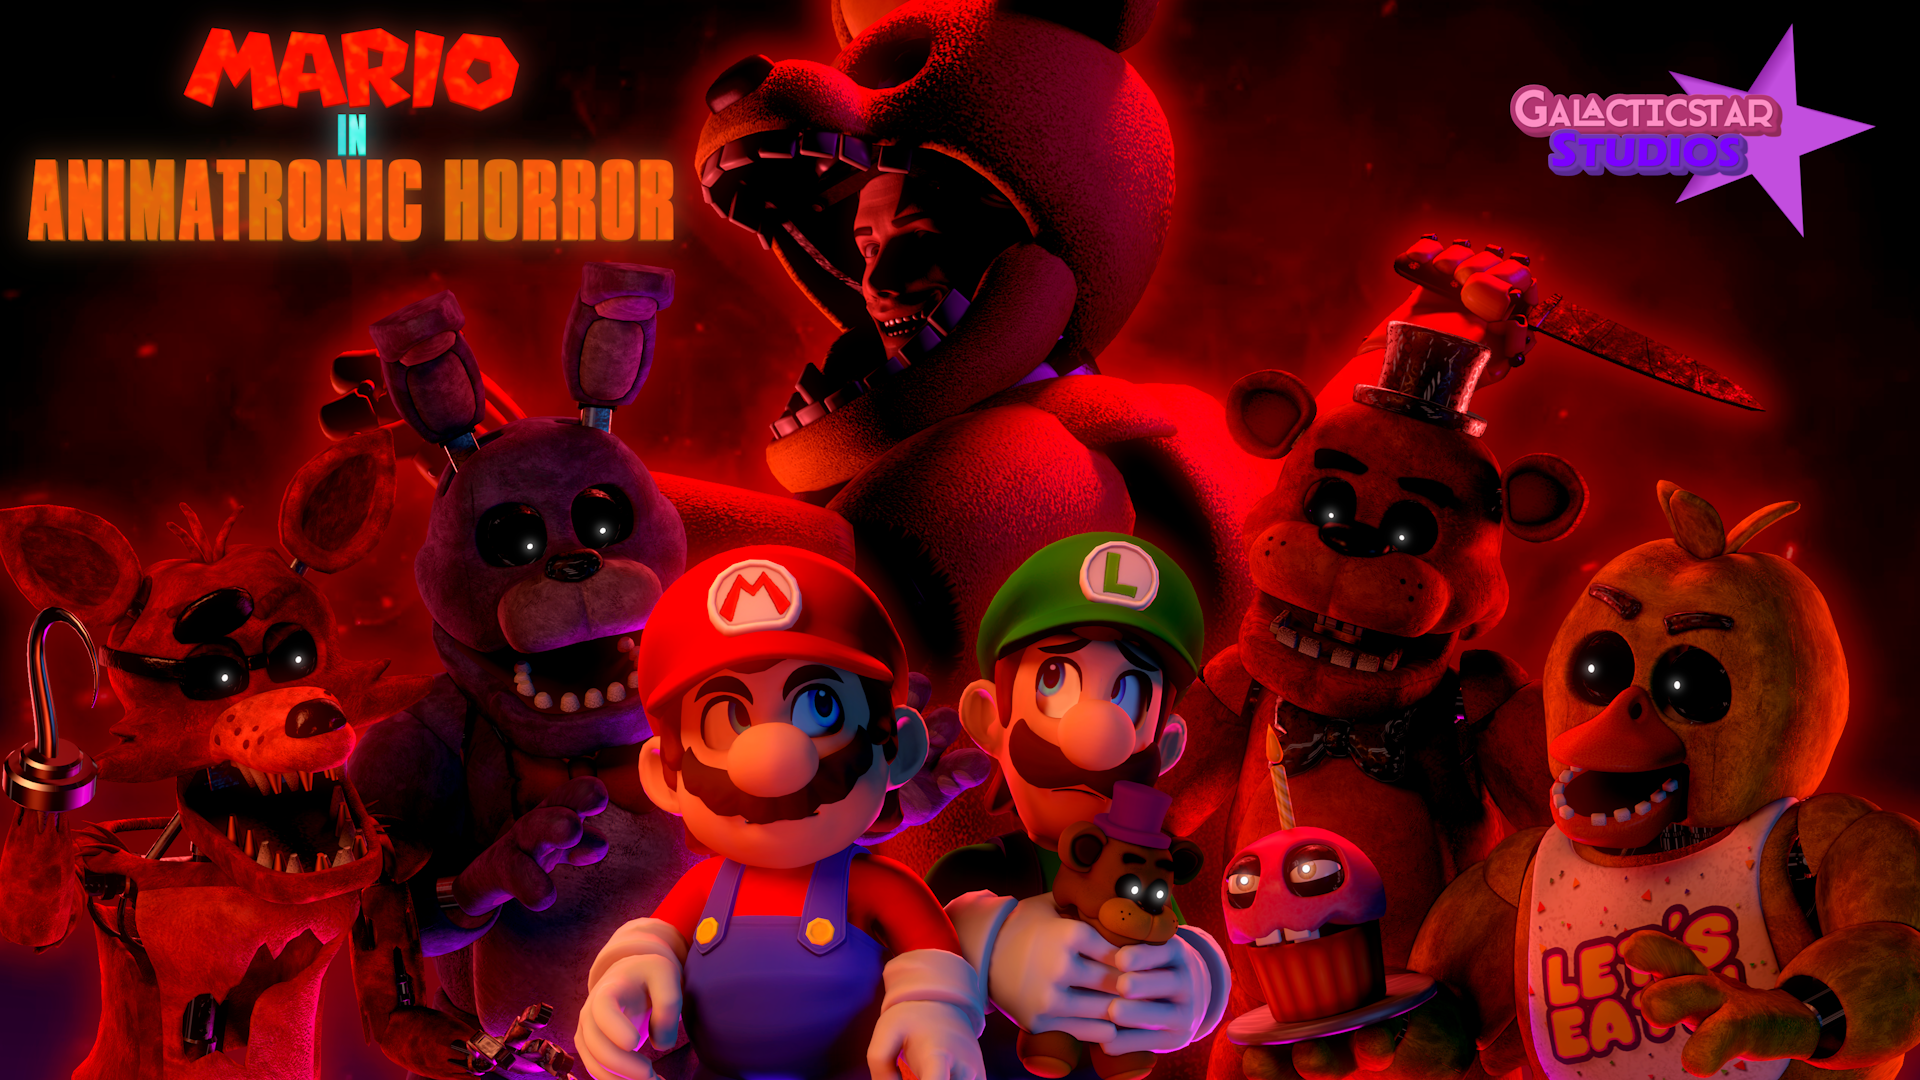 Mario In Animatronic Horror